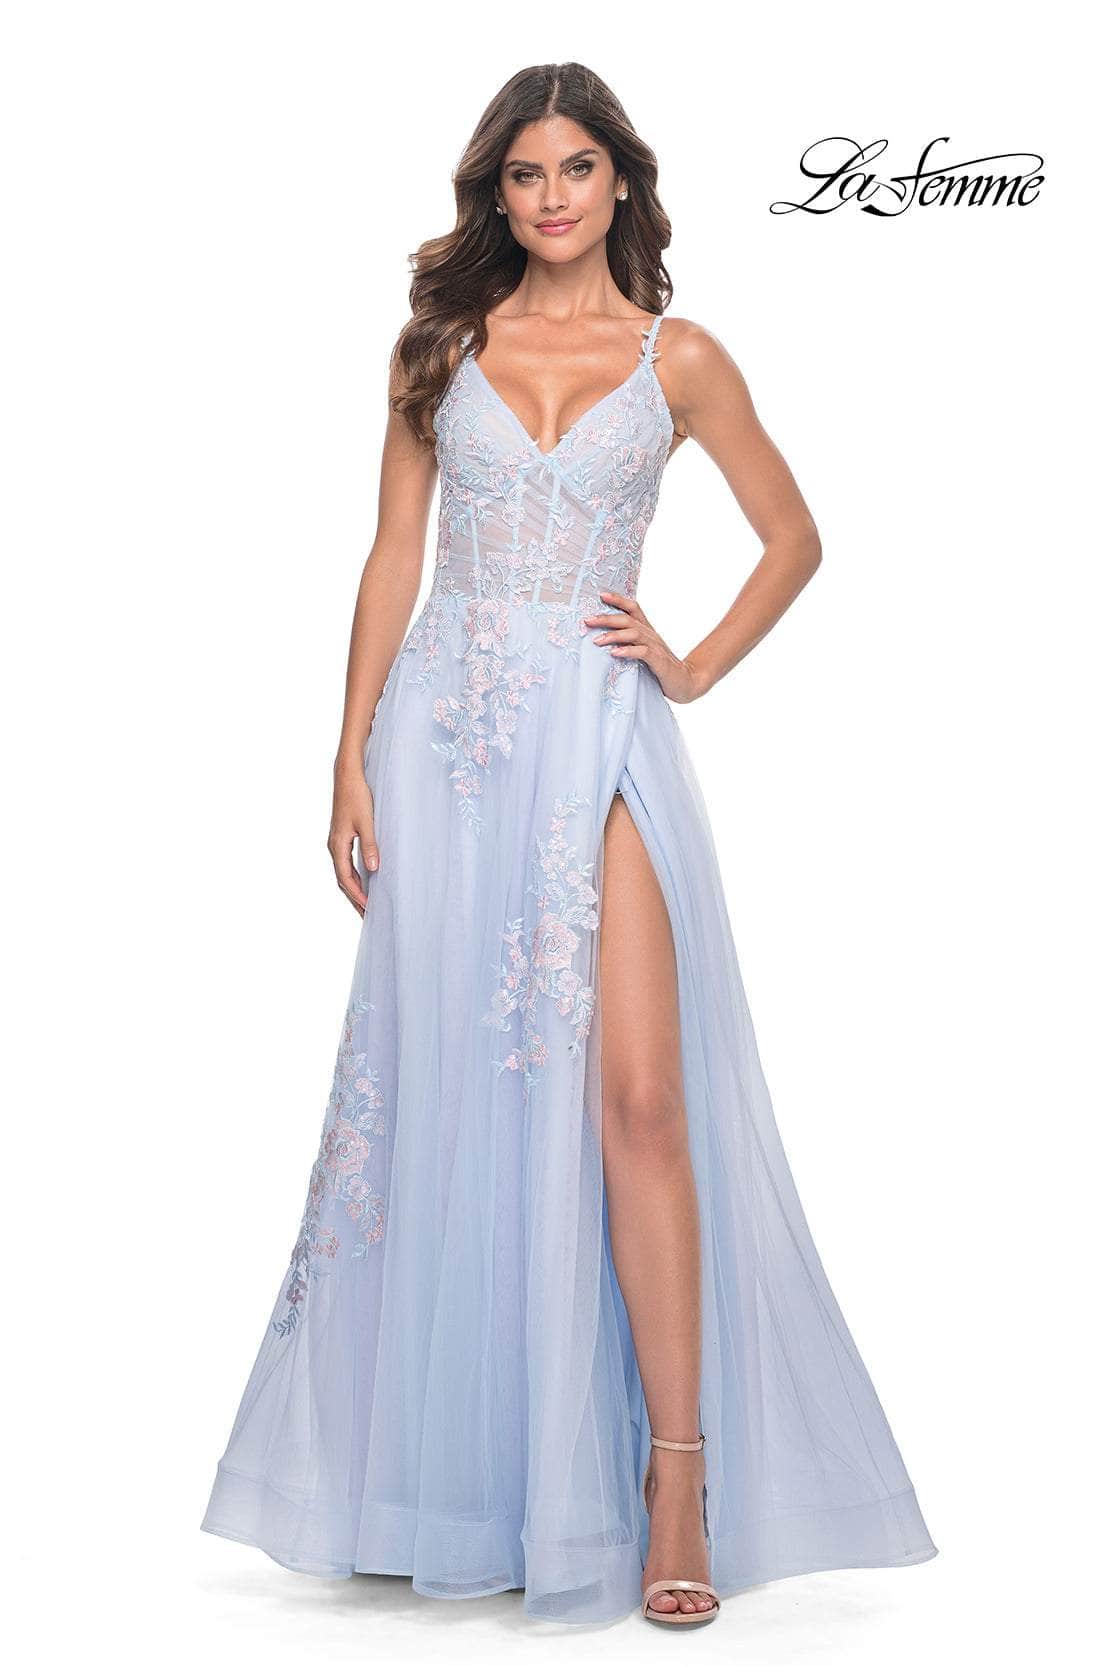 La Femme 31939 - Tulle A-Line Prom Dress
